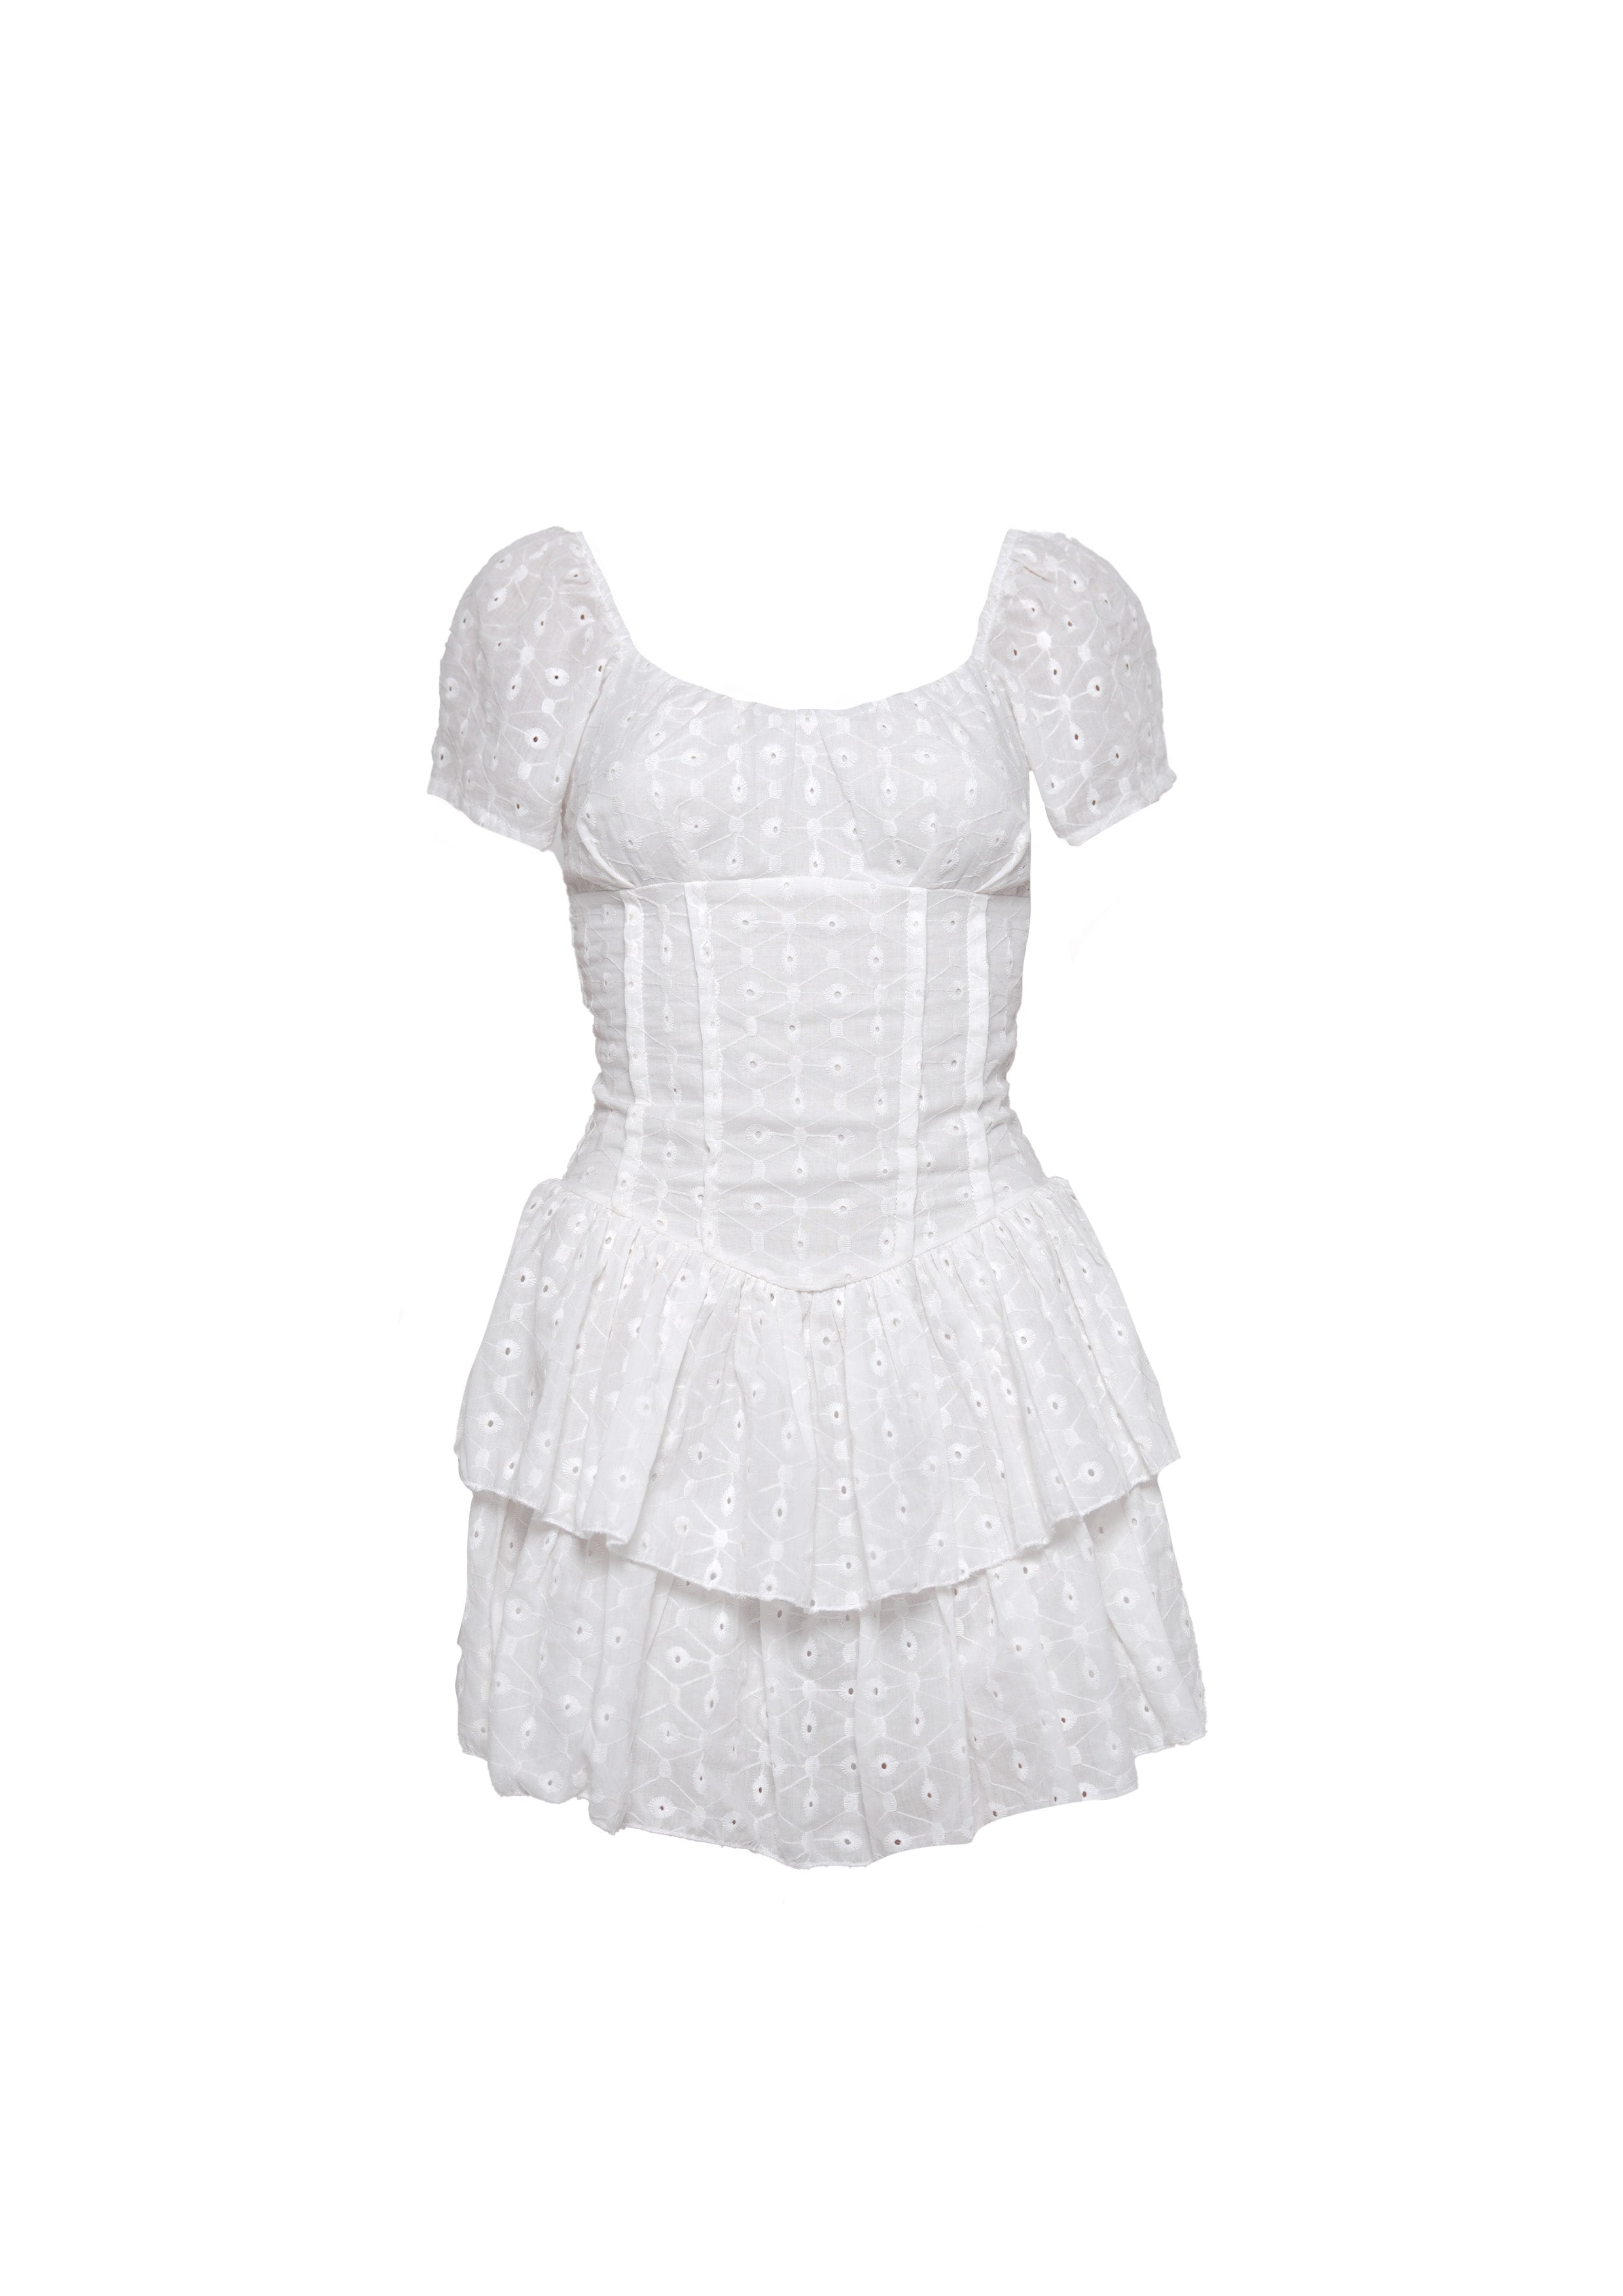 "Midsummer" dress white